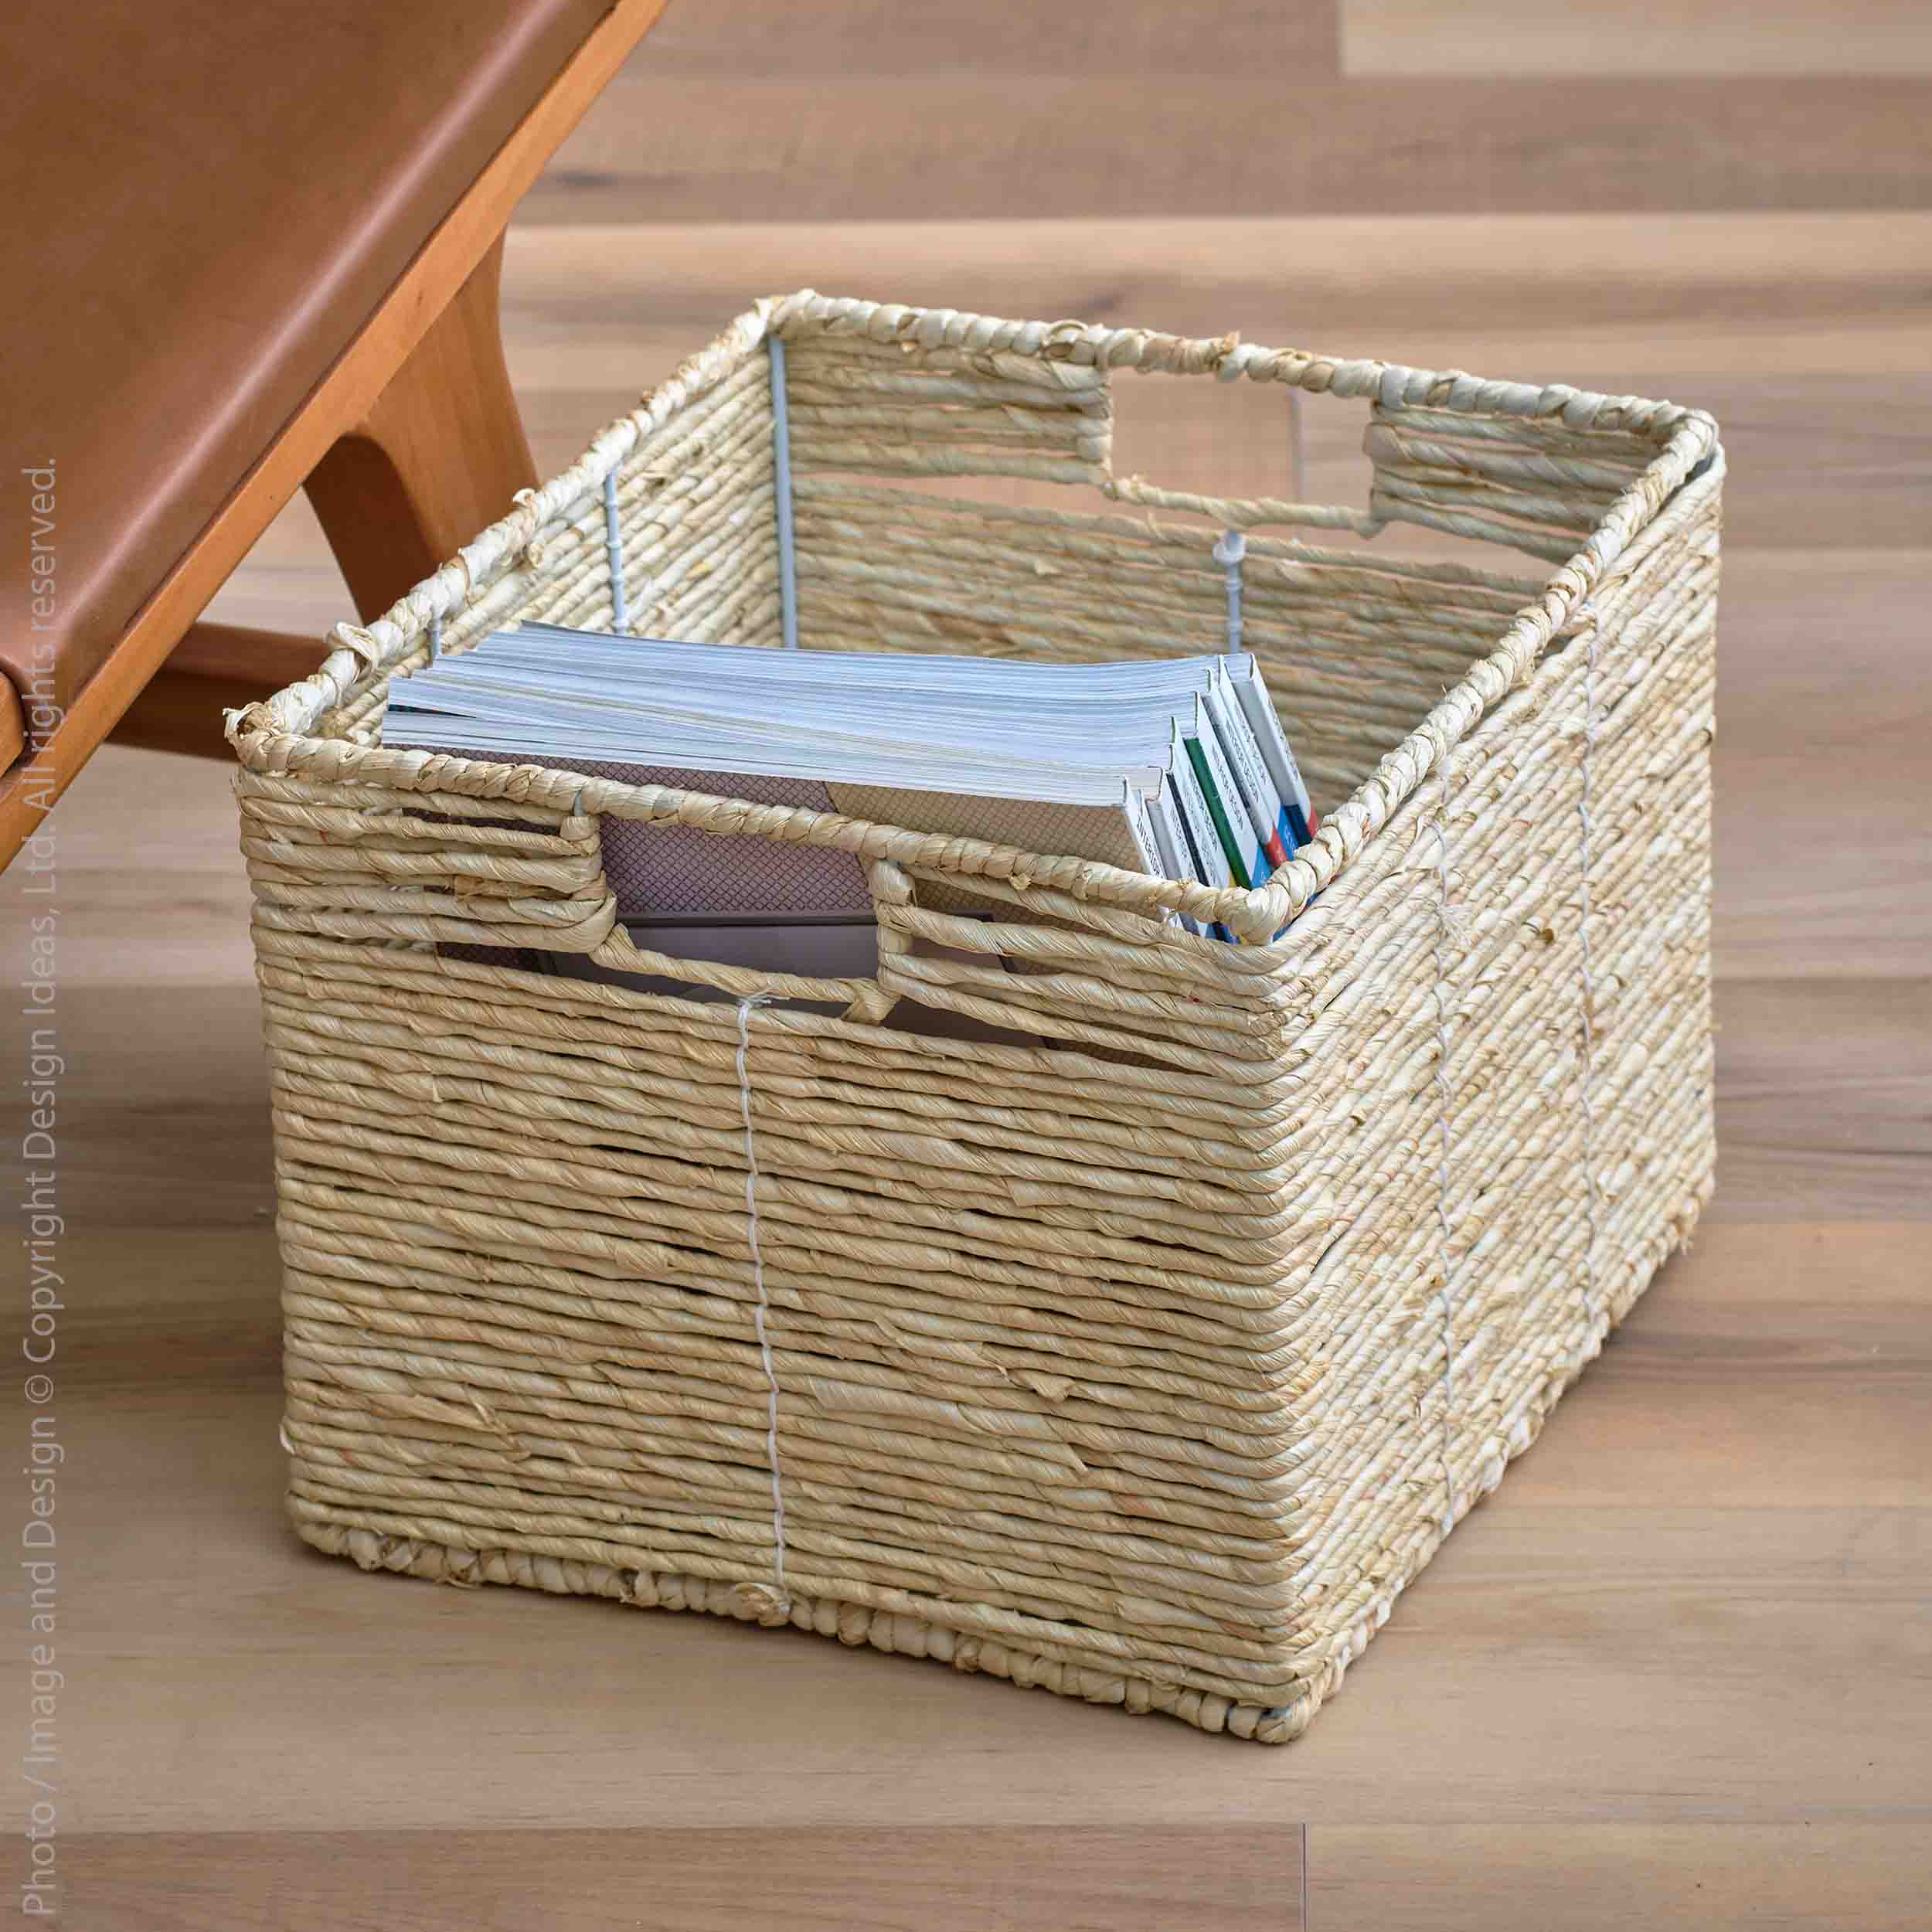 Maiz™ Woven Corn Leaf Basket (13 x 11 in)